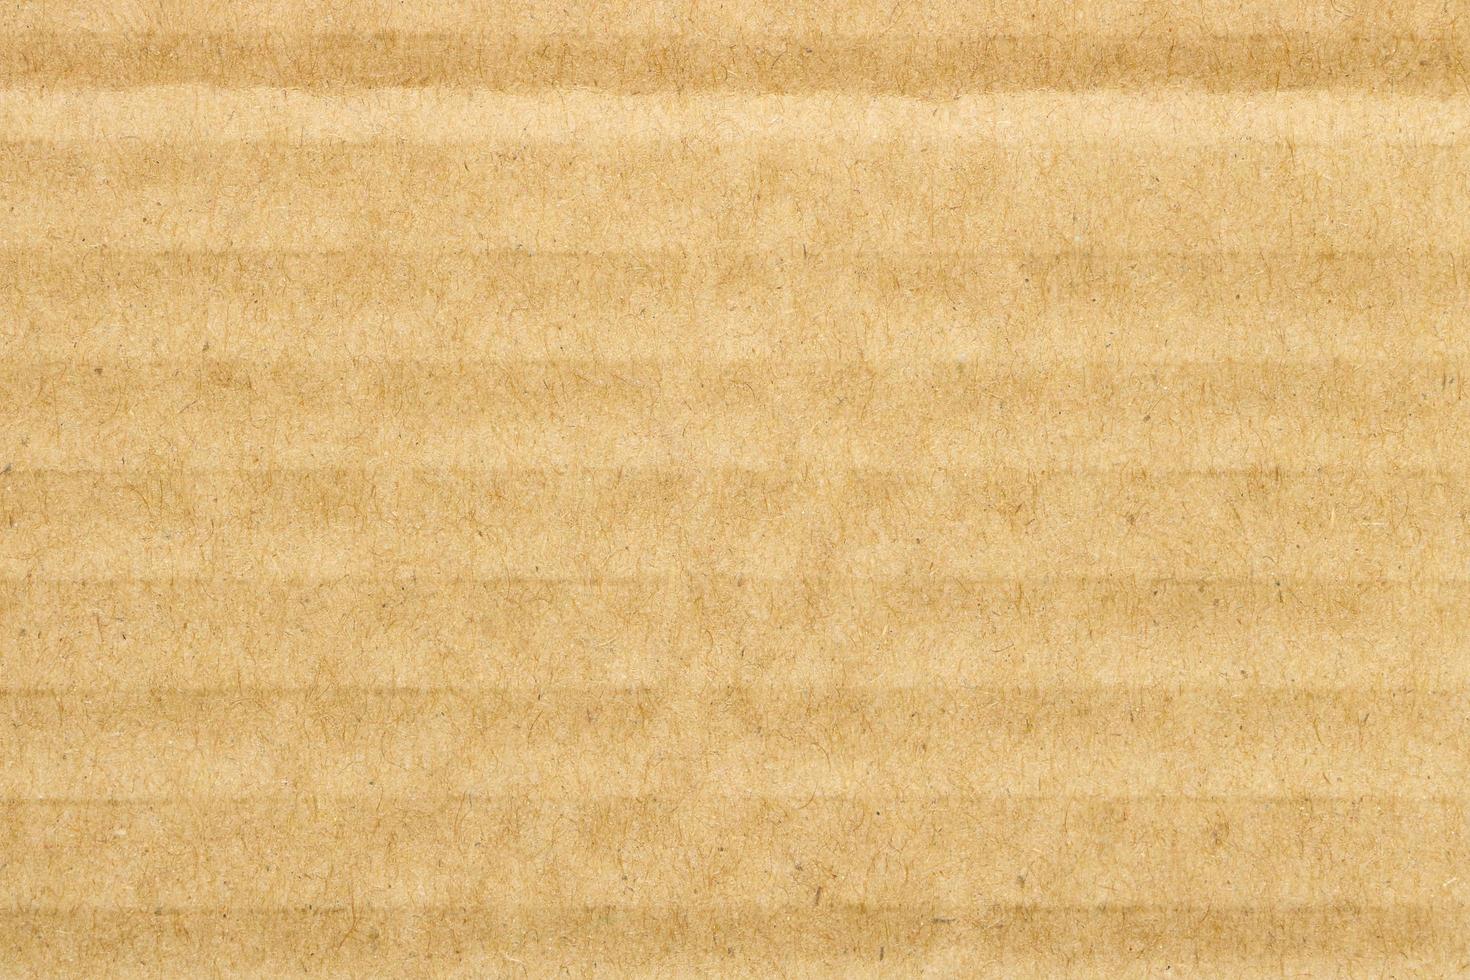 bruine kartonnen textuur achtergrond, horizontale strepen foto